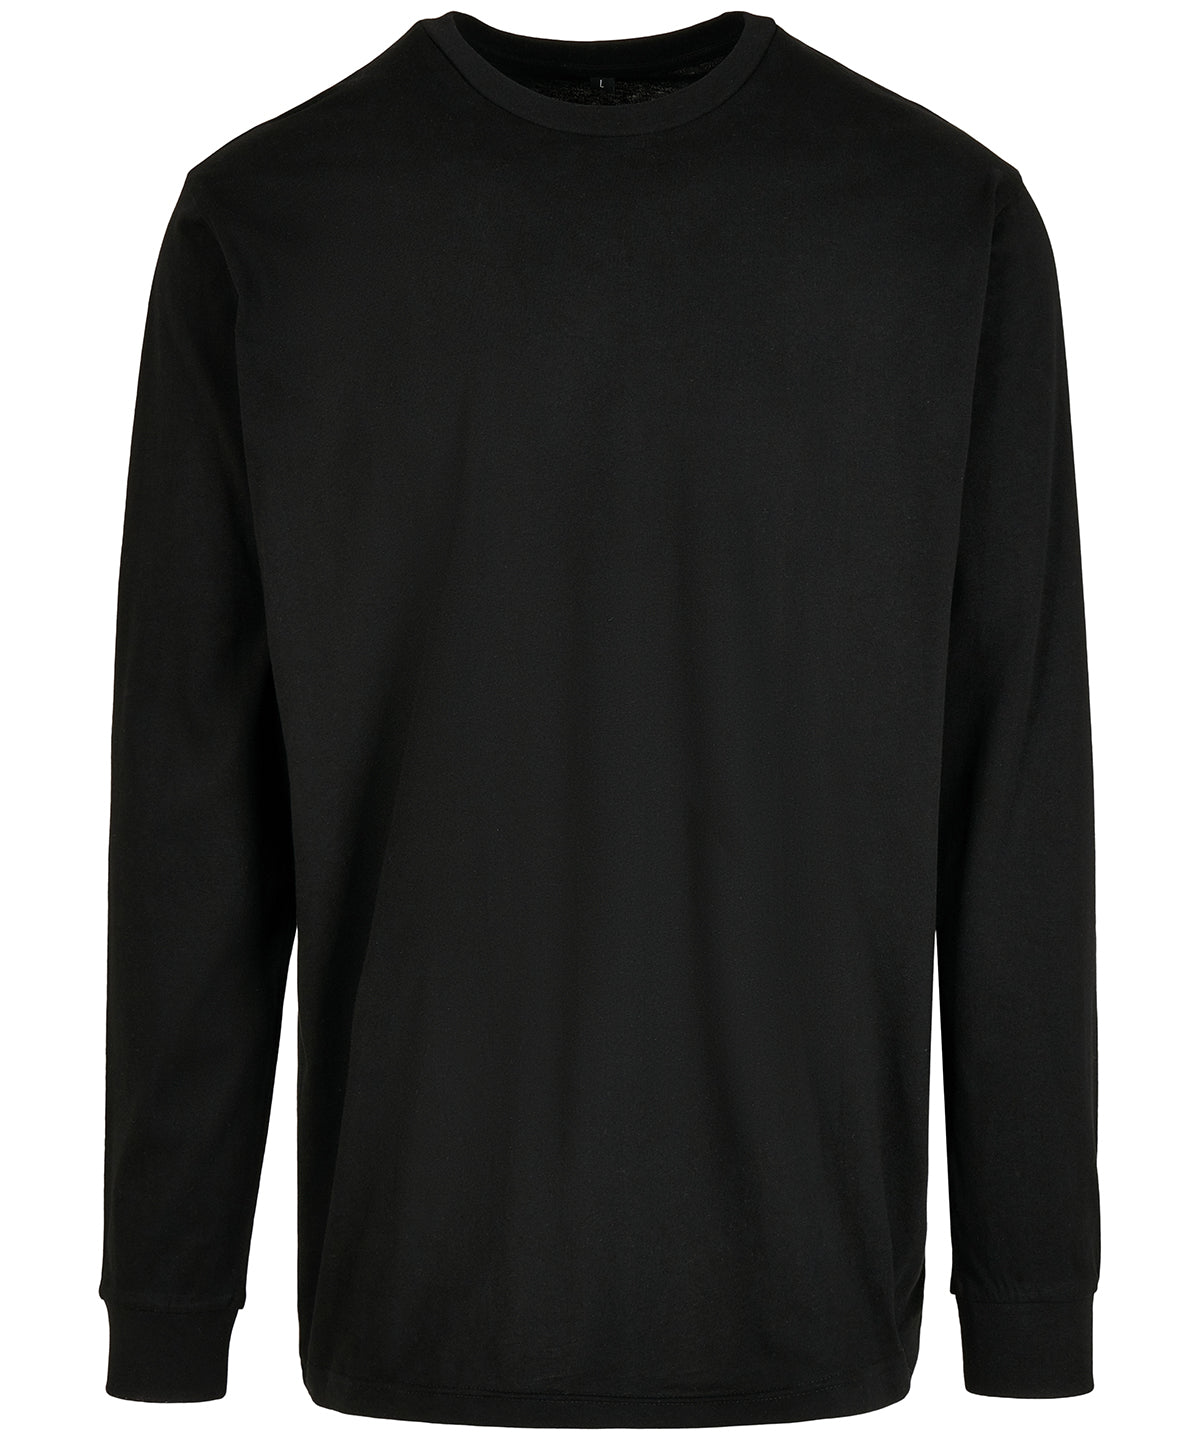 Personalised Sweatshirts - Black Build Your Brand Organic long sleeve with cuff rib